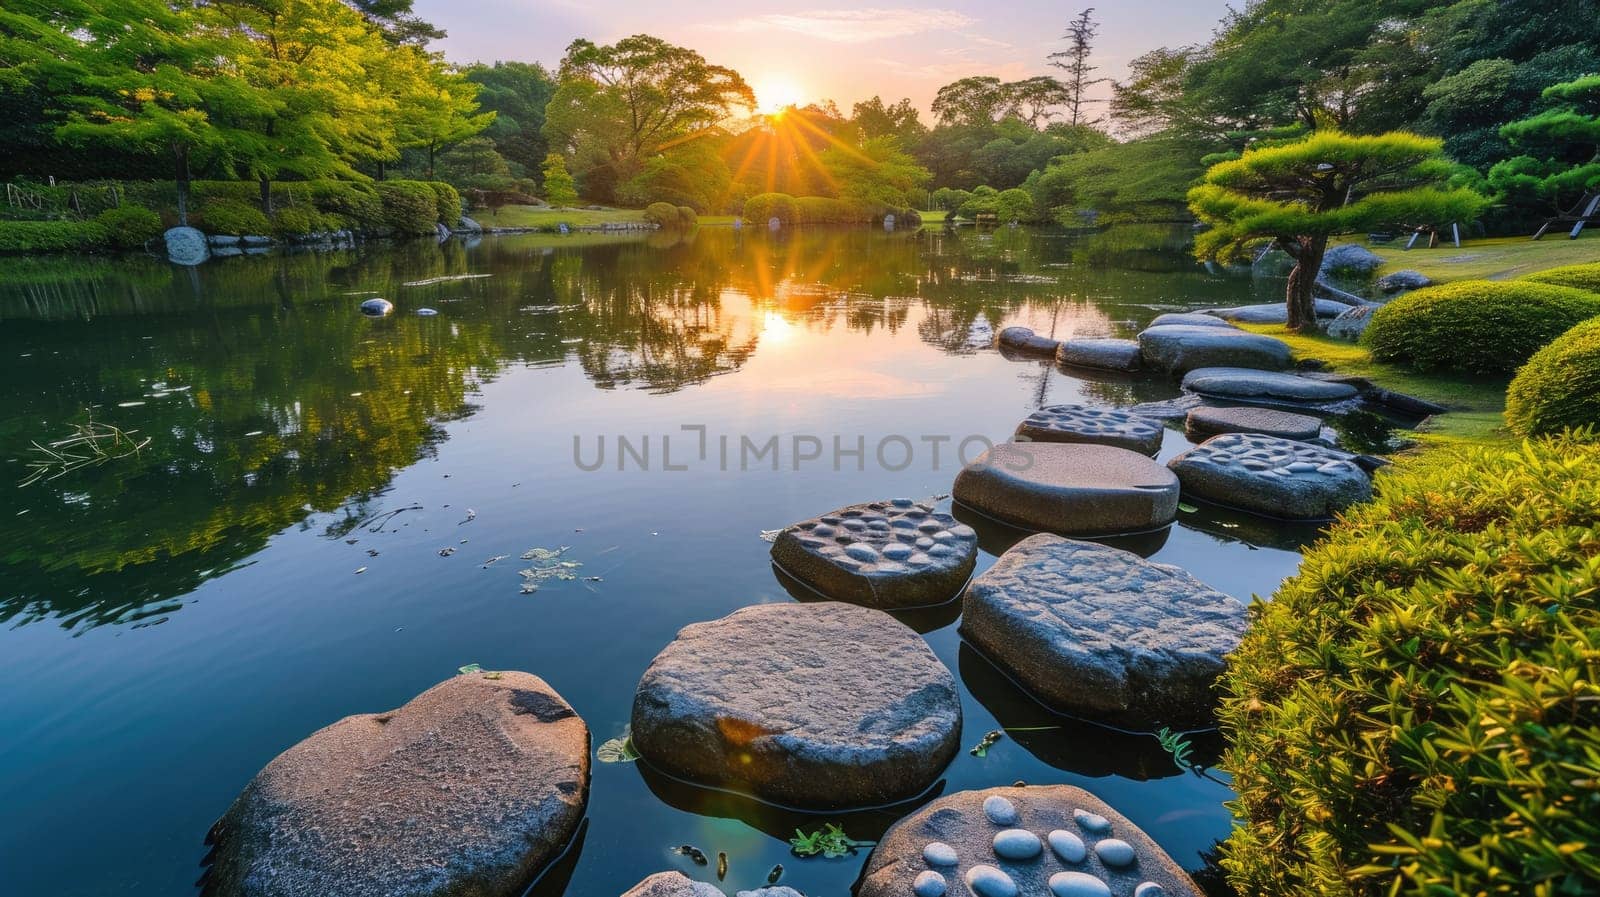 Path of circular stepping stones across a calm pond in a lush, serene zen garden at sunrise. Resplendent.